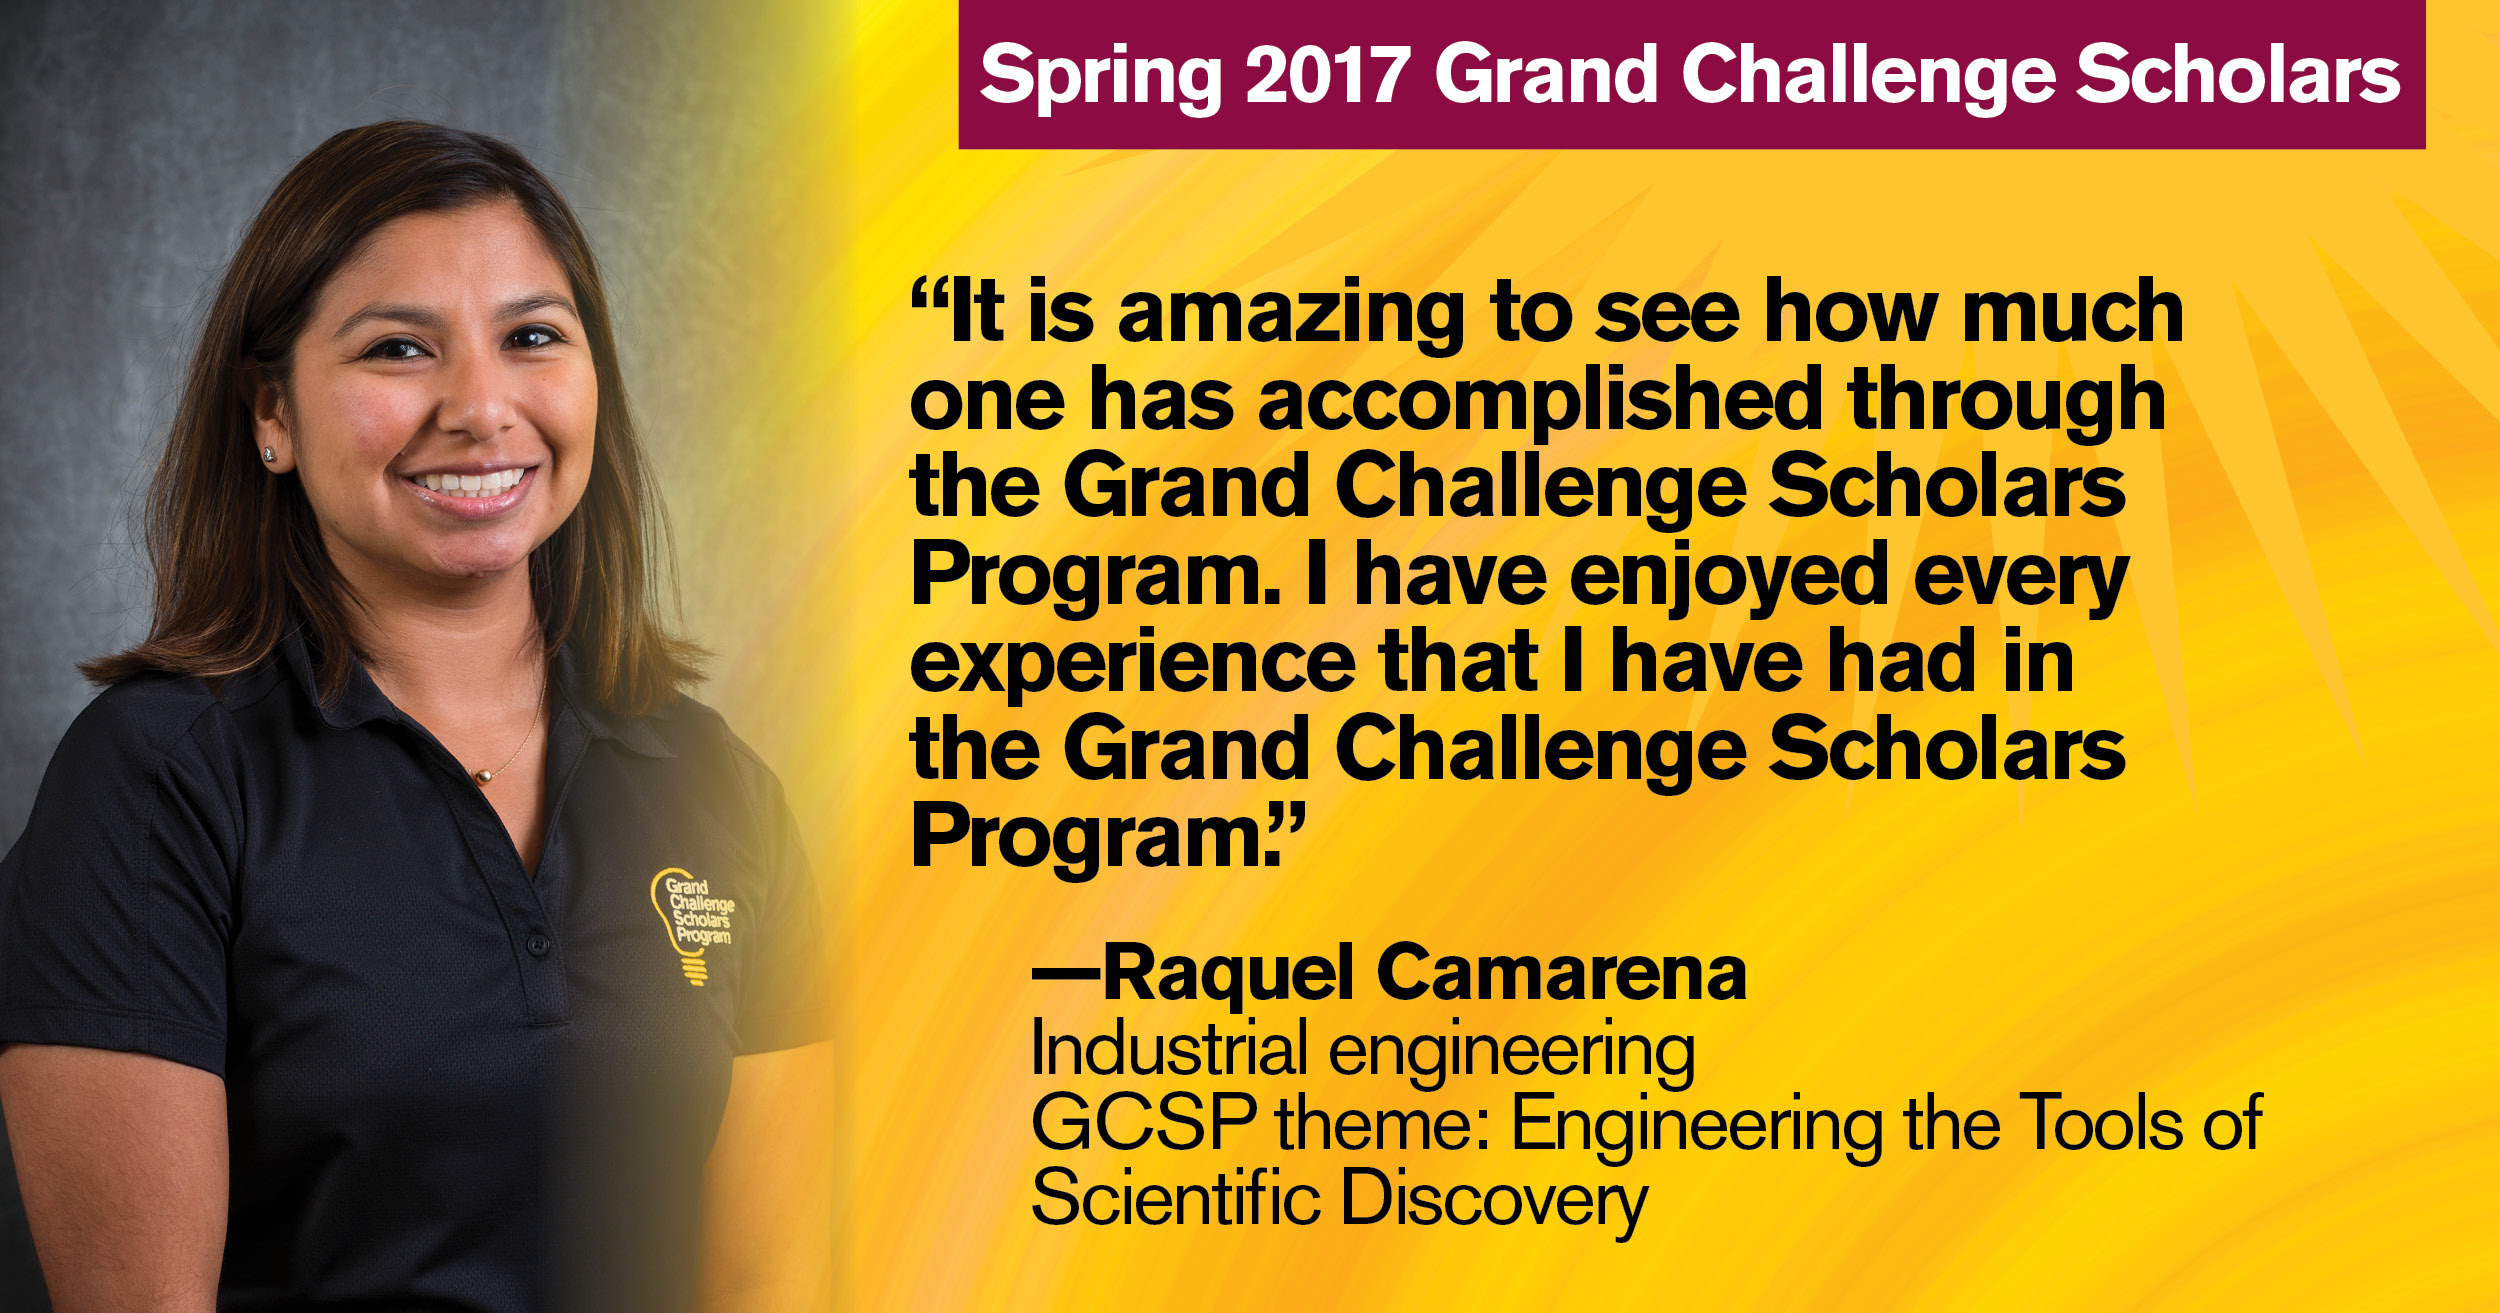 Spring 2017 Grand Challenge Scholar Raquel Camarena